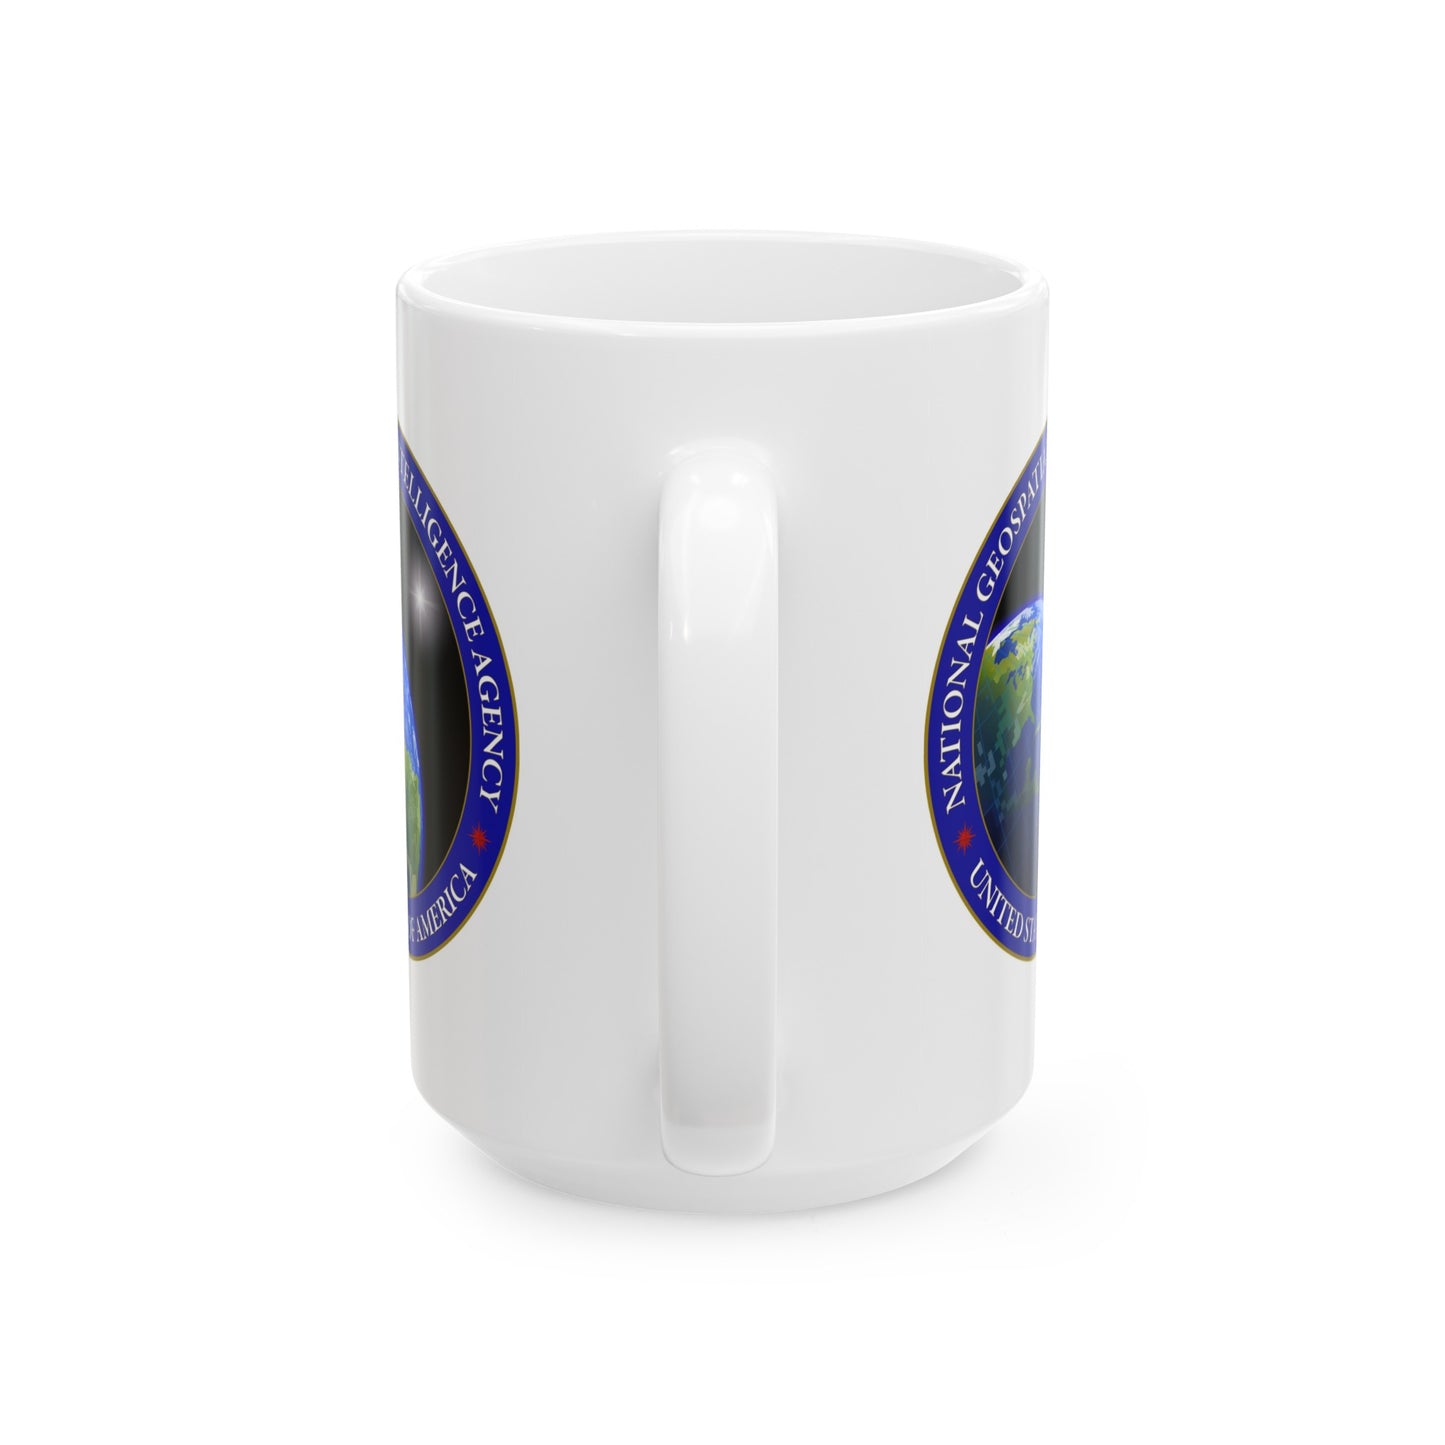 National Geospatial-Intelligence Agency Coffee Mug Double Sided Black Accent White Ceramic 15oz.com